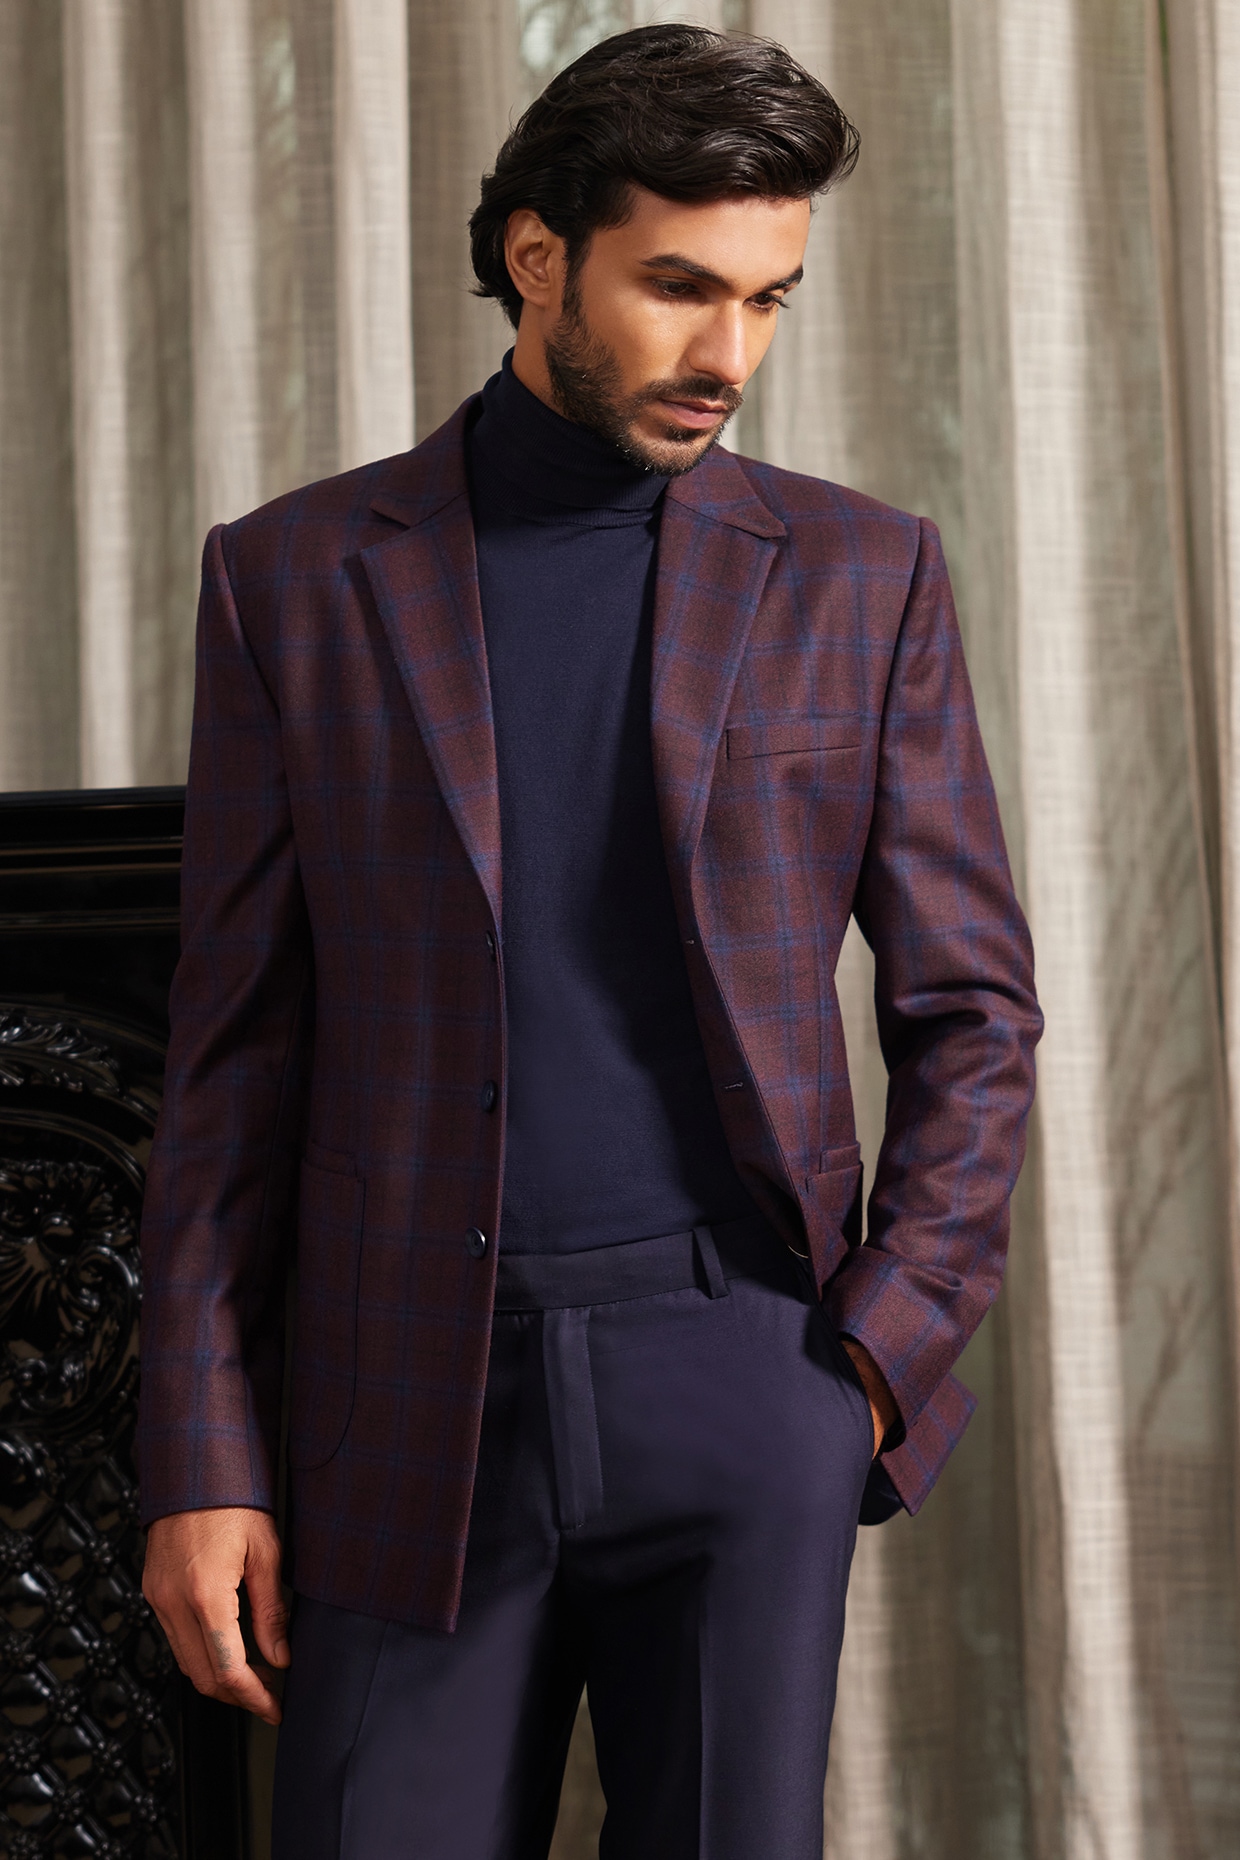 This burgundy blazer ...well suited | Mens burgundy blazer, Burgundy blazer  outfit, Mens outfits